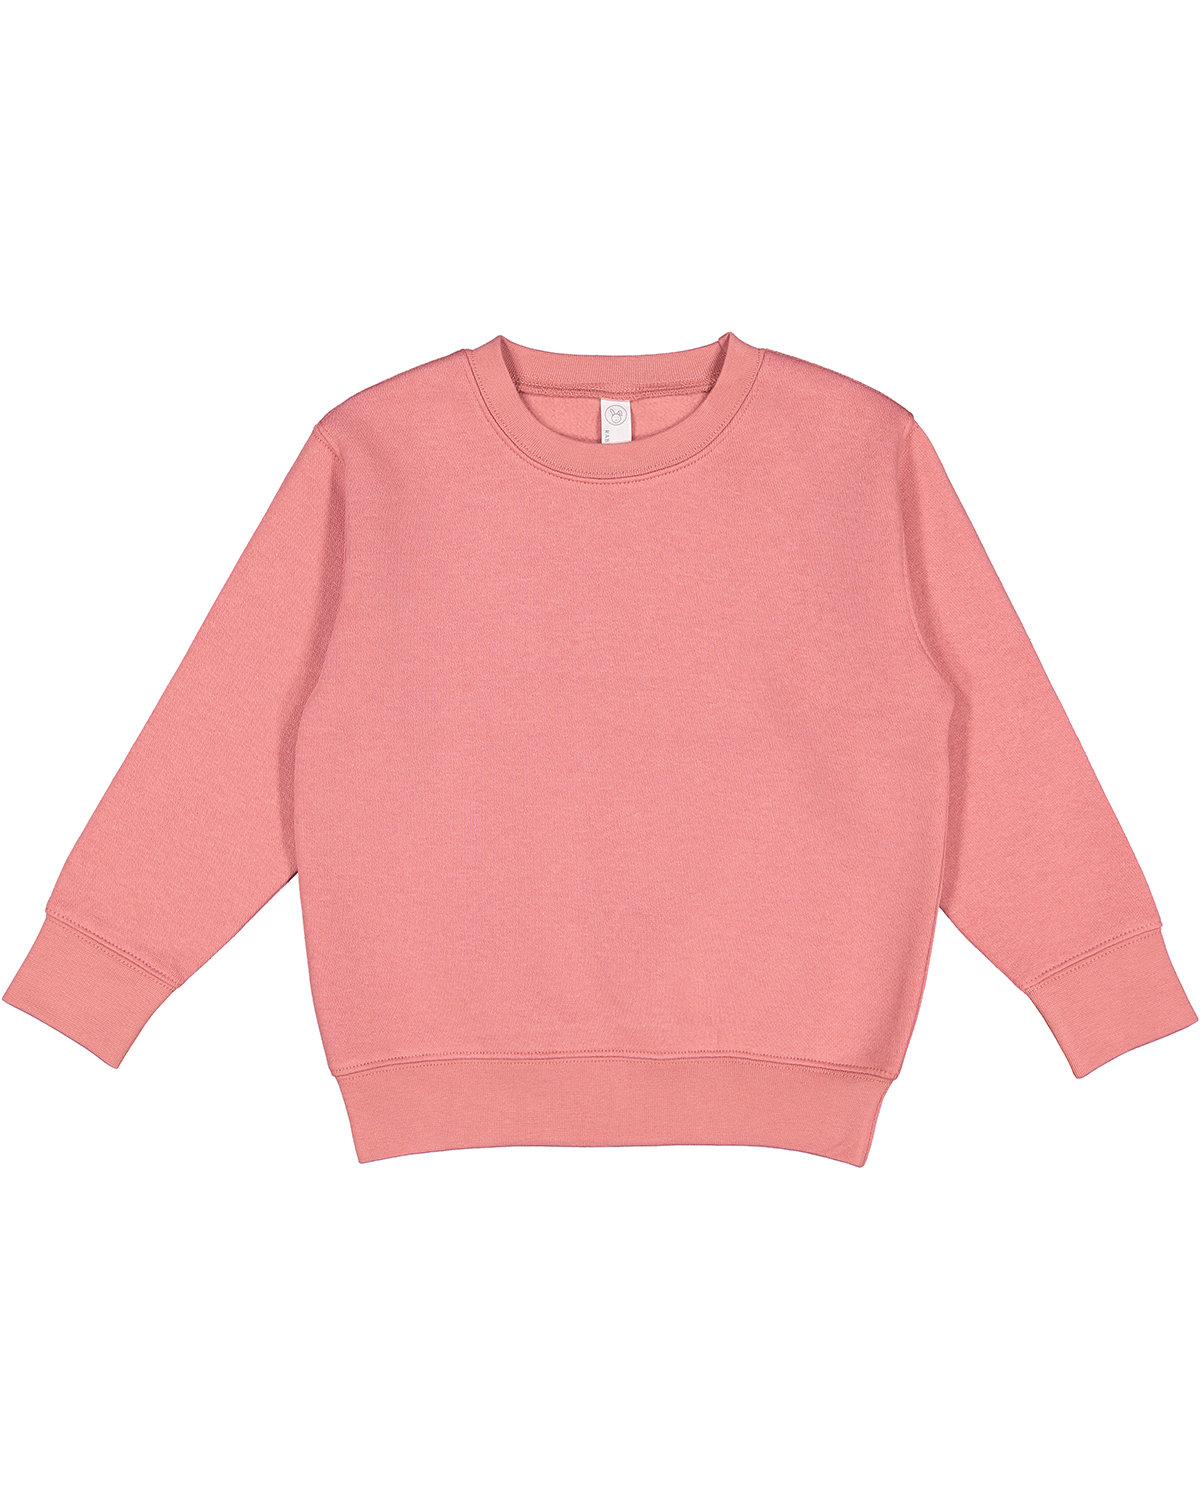 RABBIT SKINS Toddler Fleece Long Sleeve Pullover Sweatshirt 